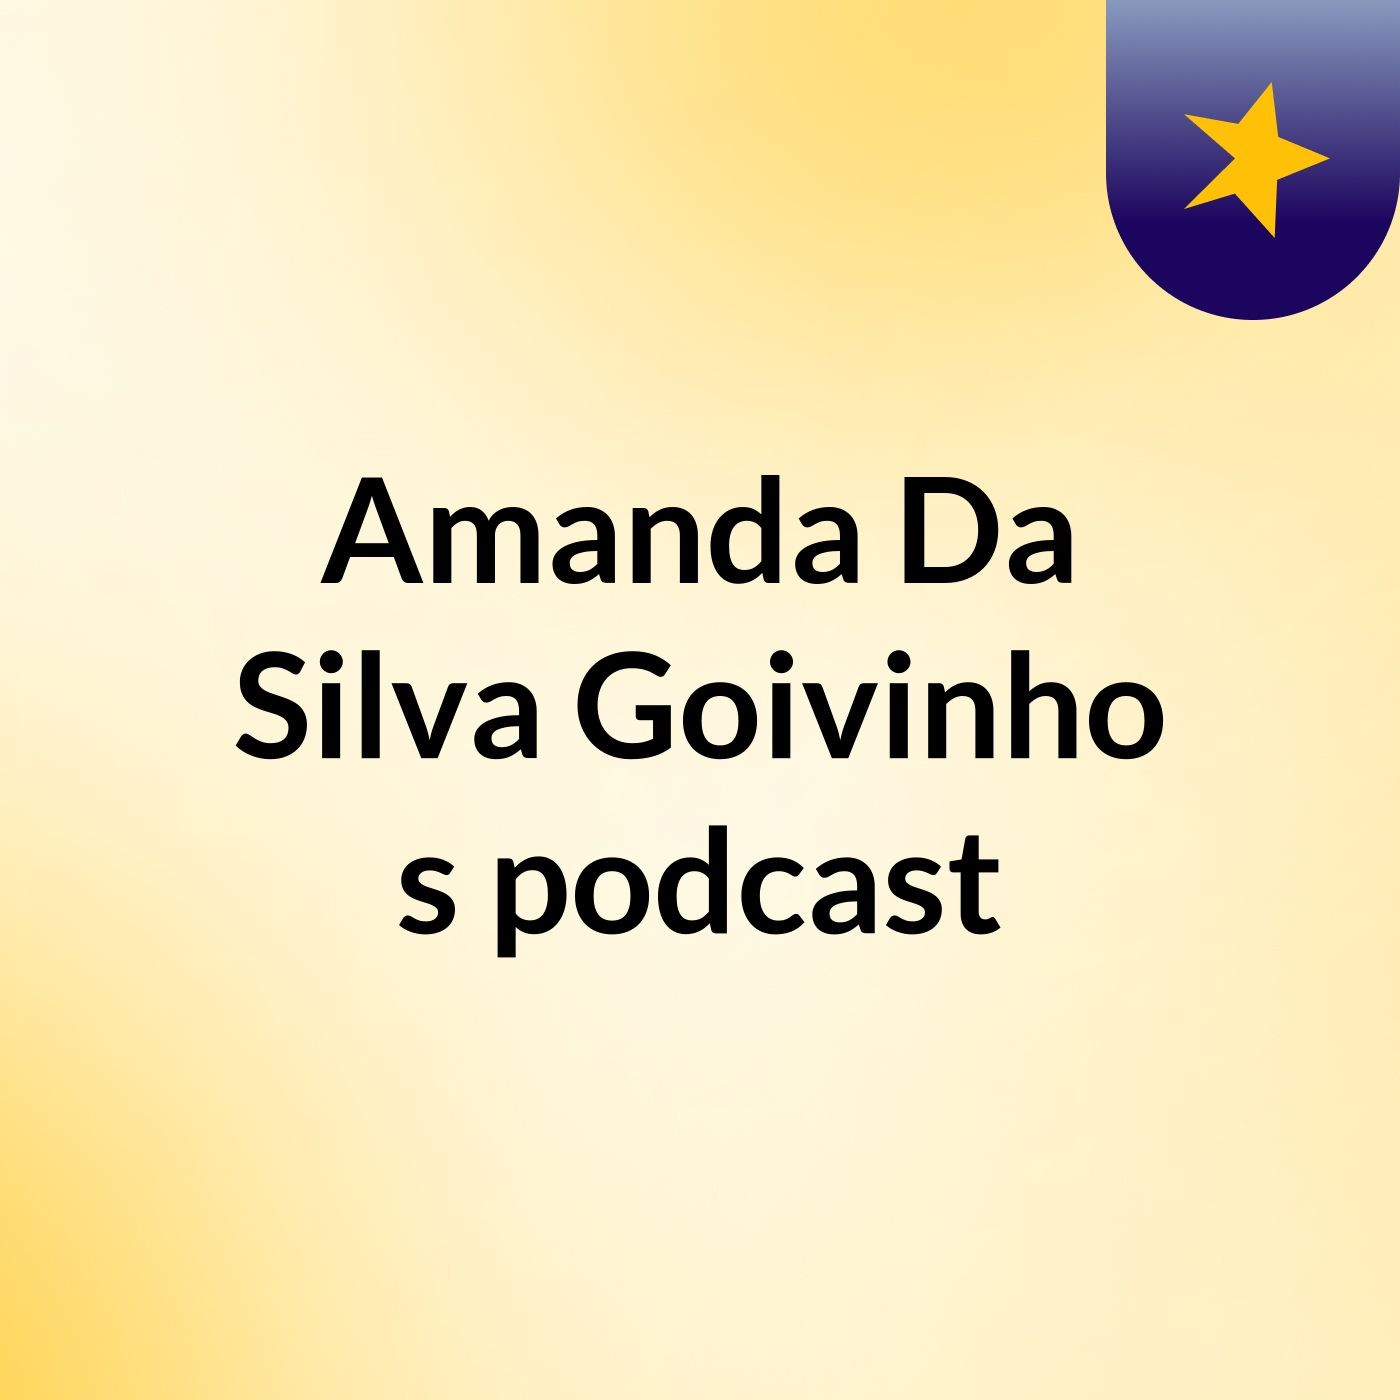 Amanda Da Silva Goivinho's podcast